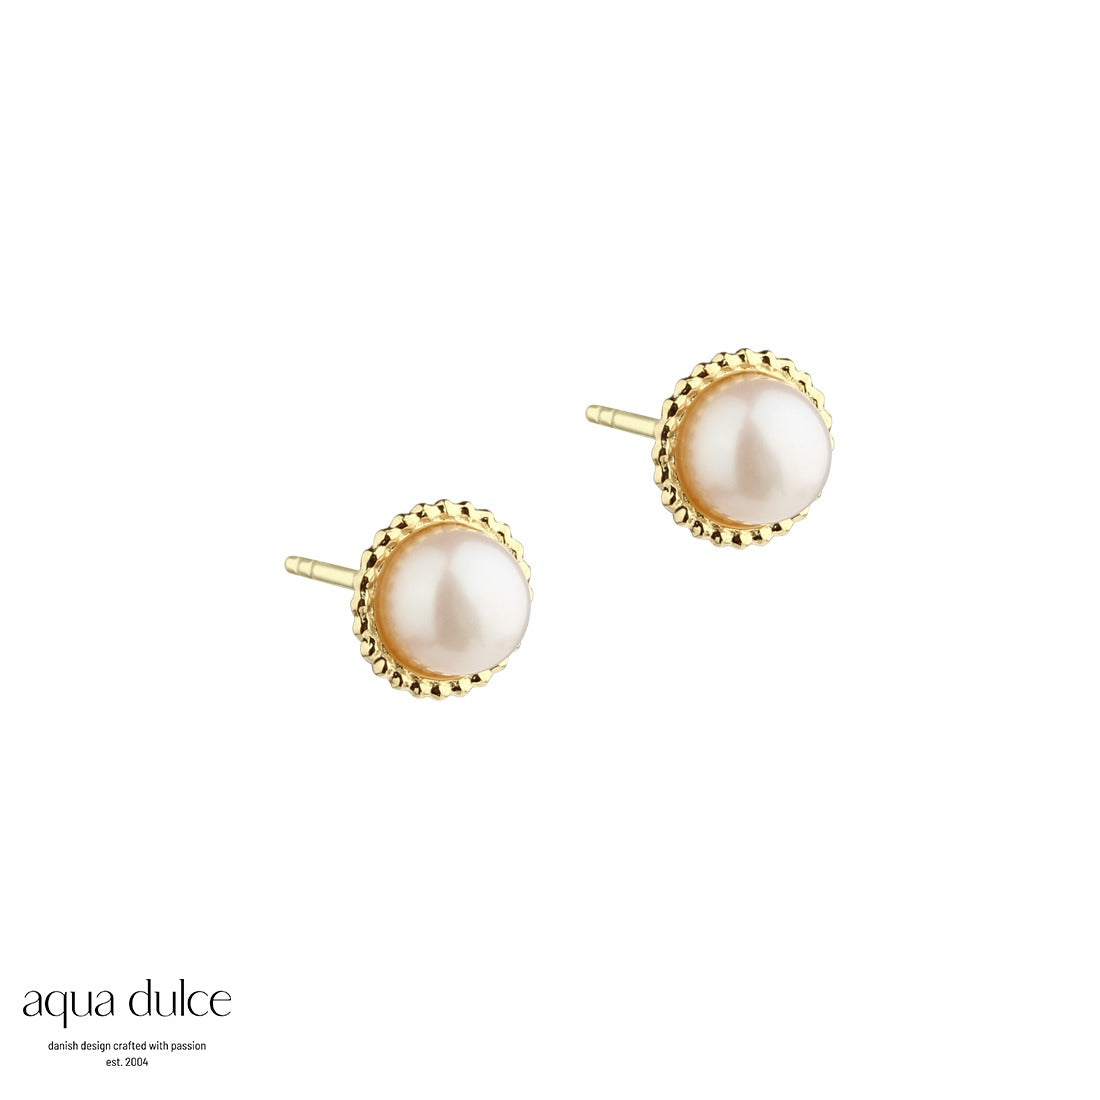 Aqua Dulce - Simple Tina øreringe med perler i forgyldt sølv